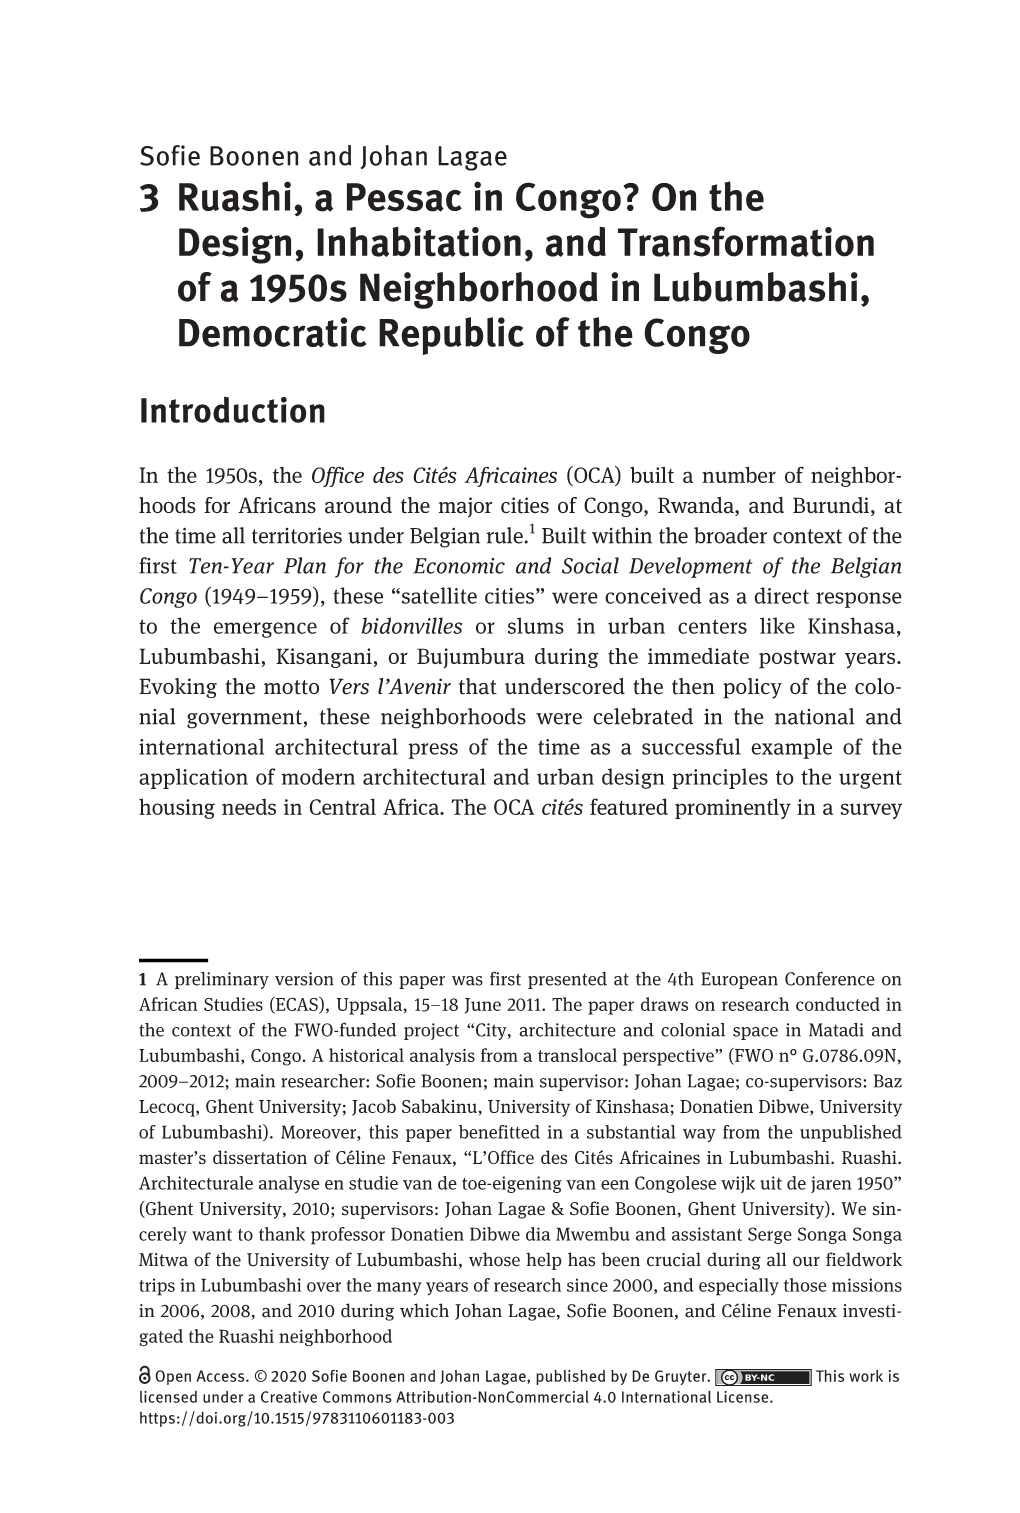 3 Ruashi, a Pessac in Congo? on the Design, Inhabitation, and Transformation of a 1950S Neighborhood in Lubumbashi, Democratic Republic of the Congo